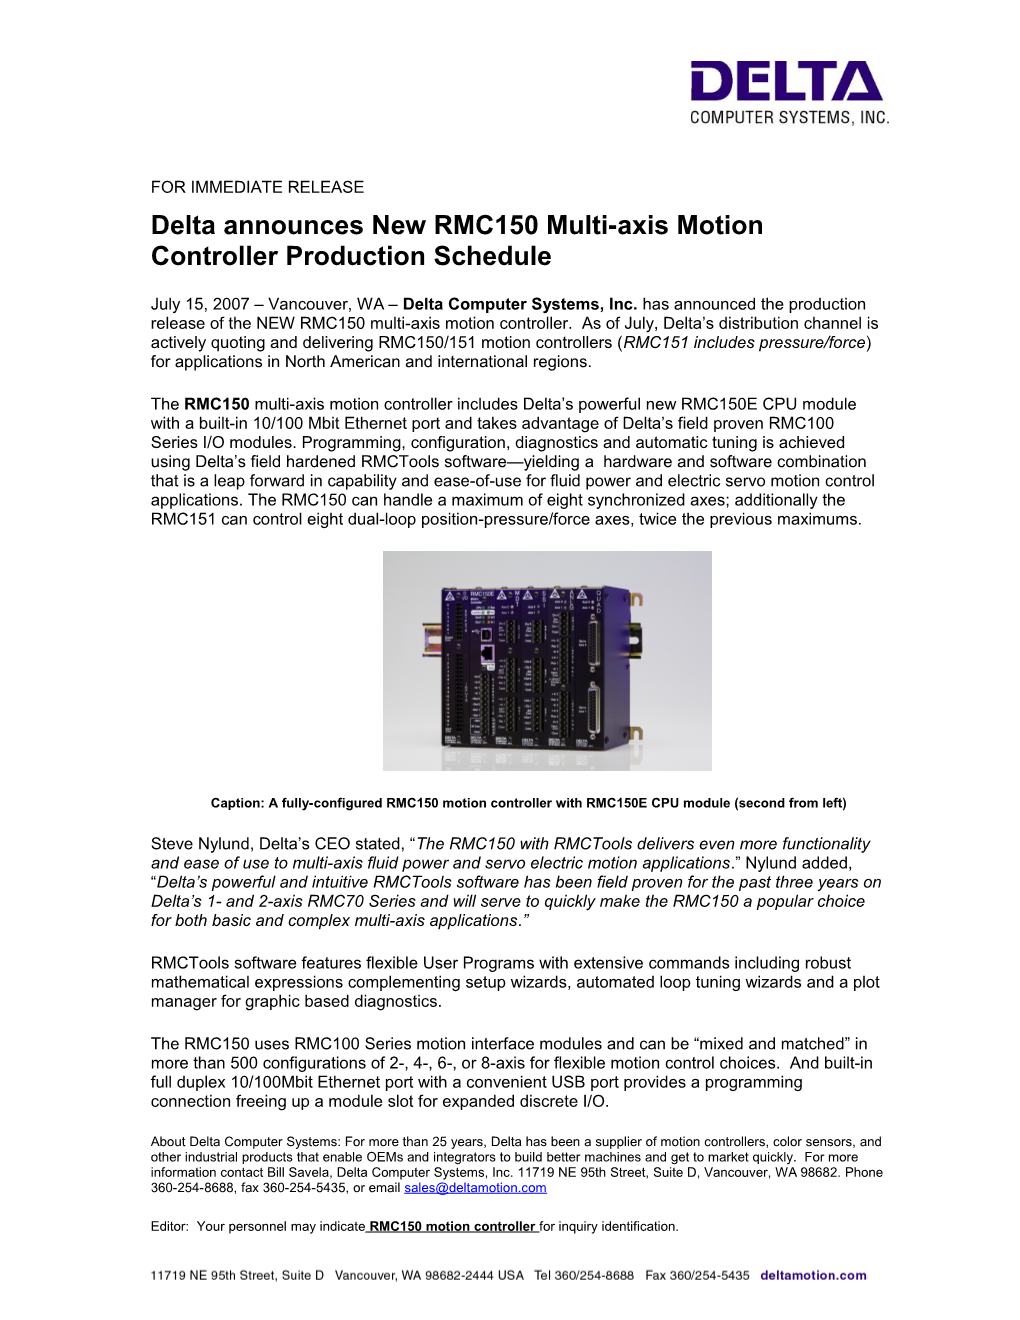 Delta Announces New RMC150 Multi-Axis Motion Controllerproduction Schedule